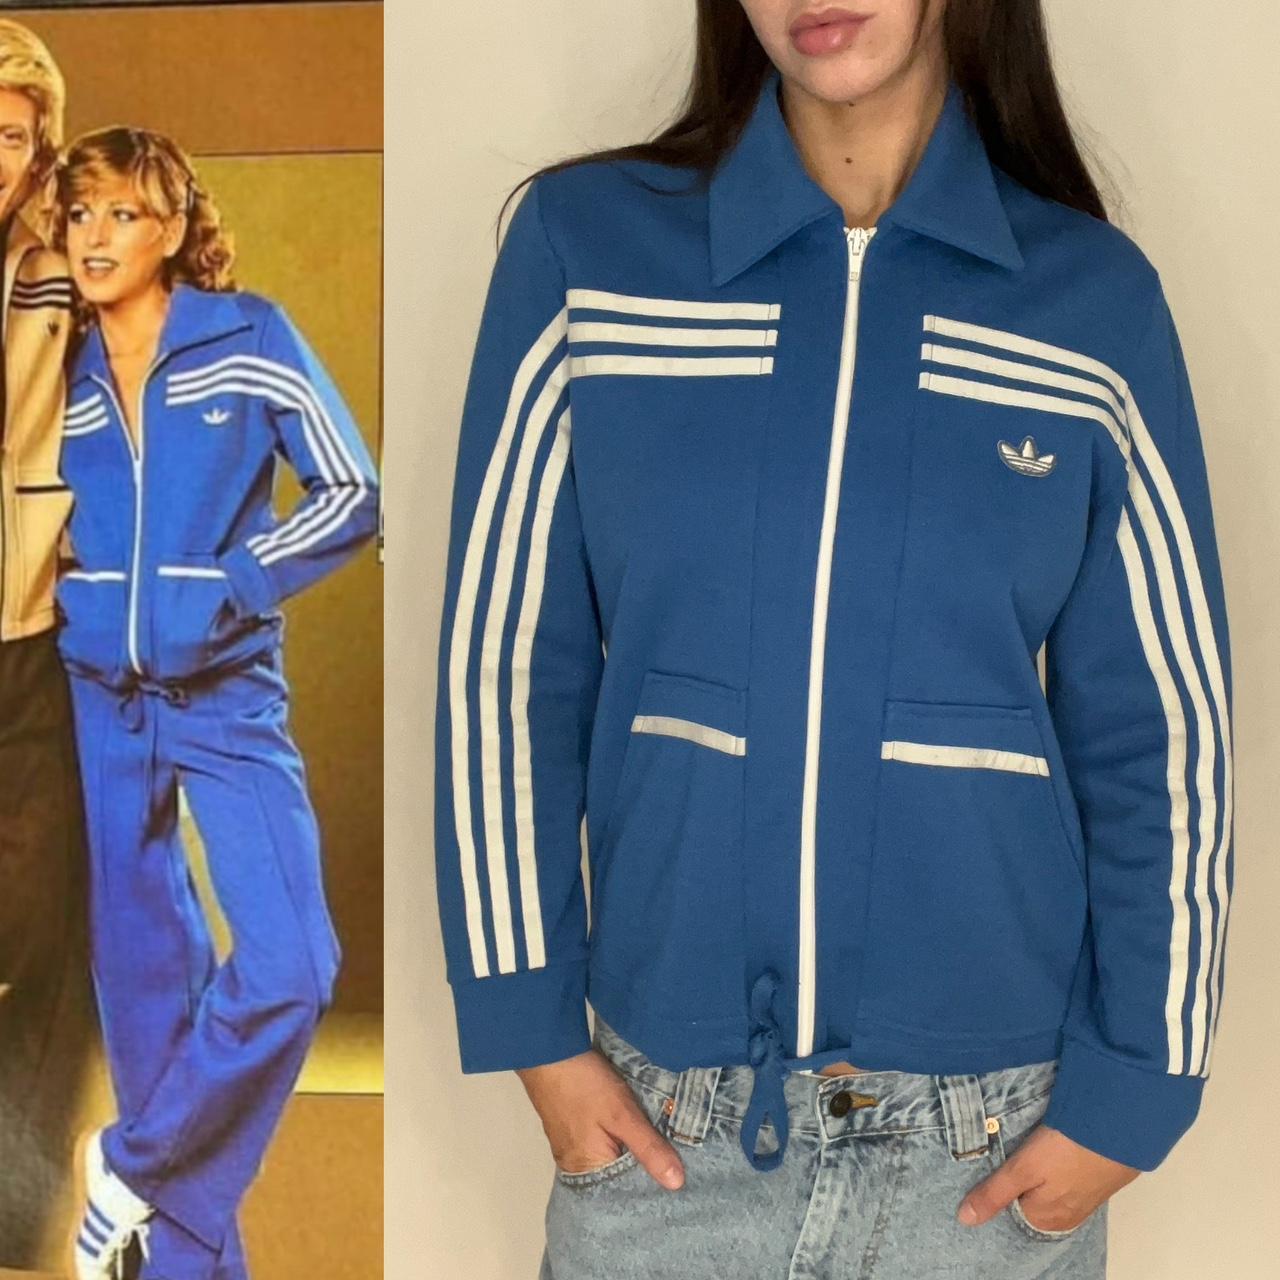 Blue vintage 1970’s Adidas track jacket, a few small